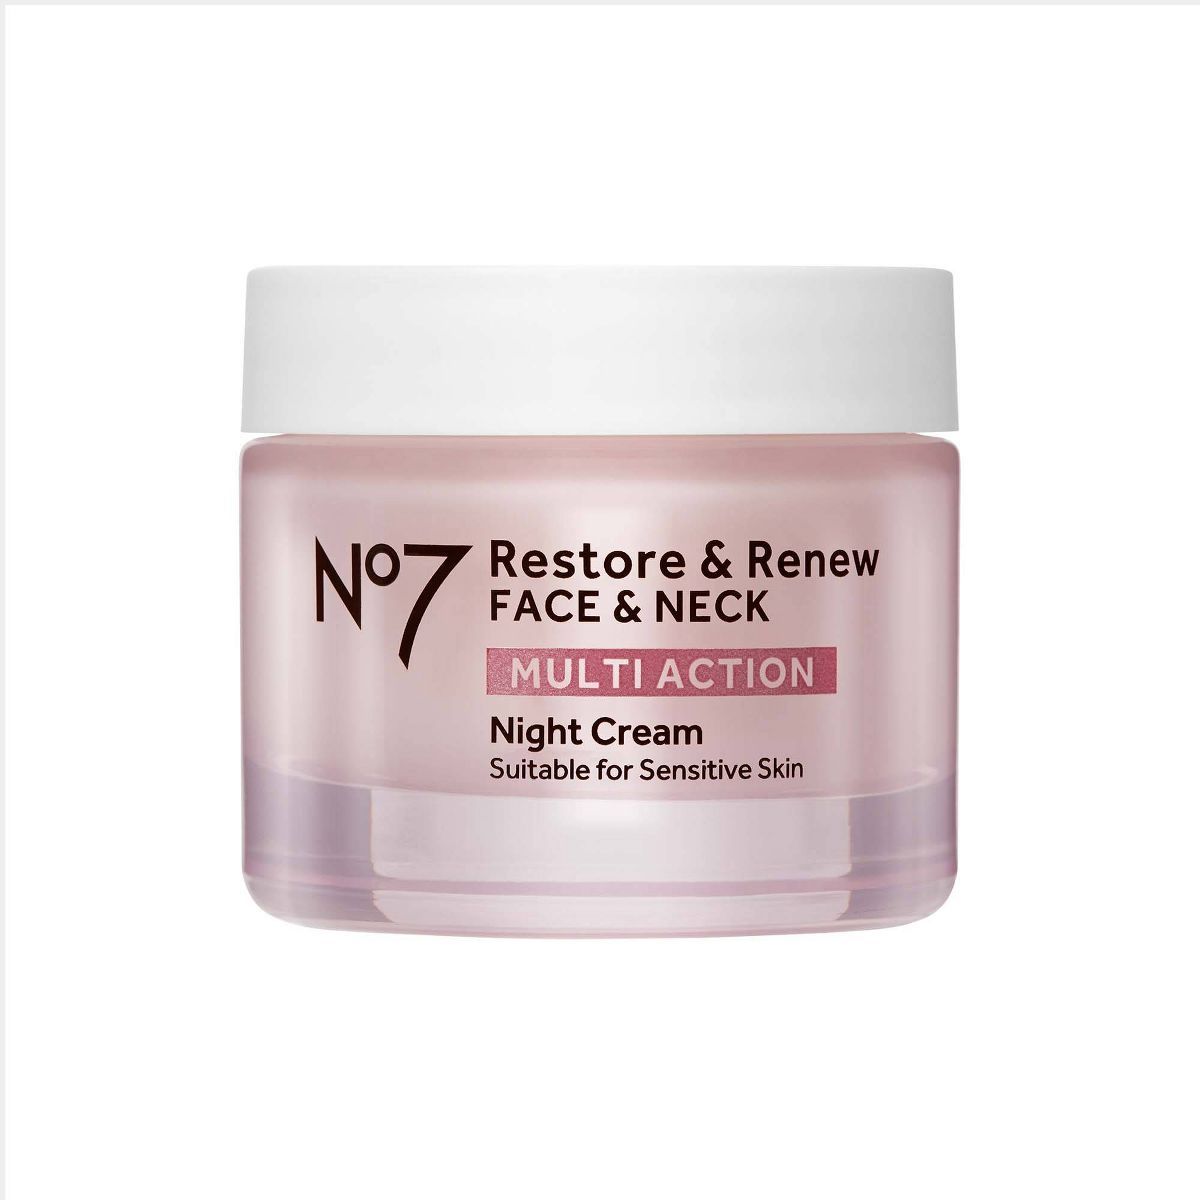 No7 Restore & Renew Multi Action Face & Neck Night Cream - 1.69 fl oz | Target